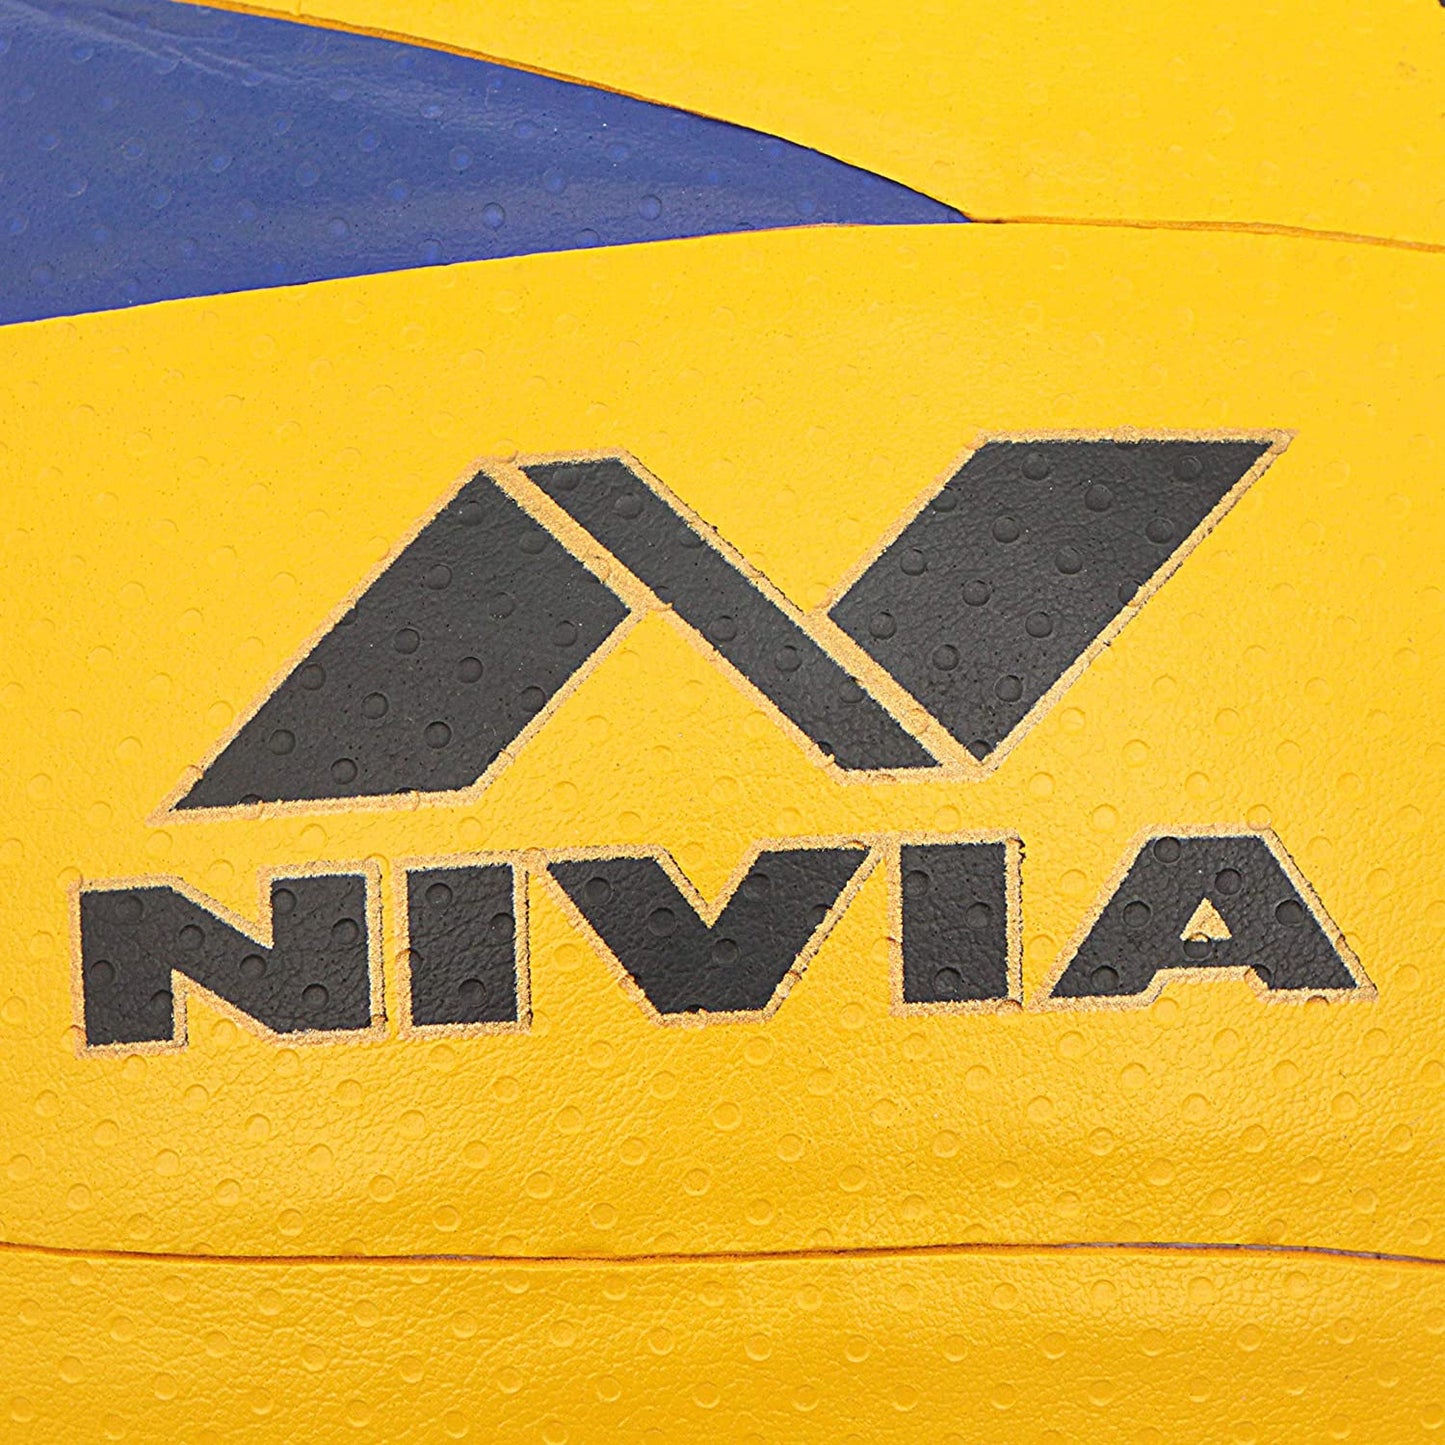 Nivia Spiral Volleyball, Yellow (Size 4) - Best Price online Prokicksports.com